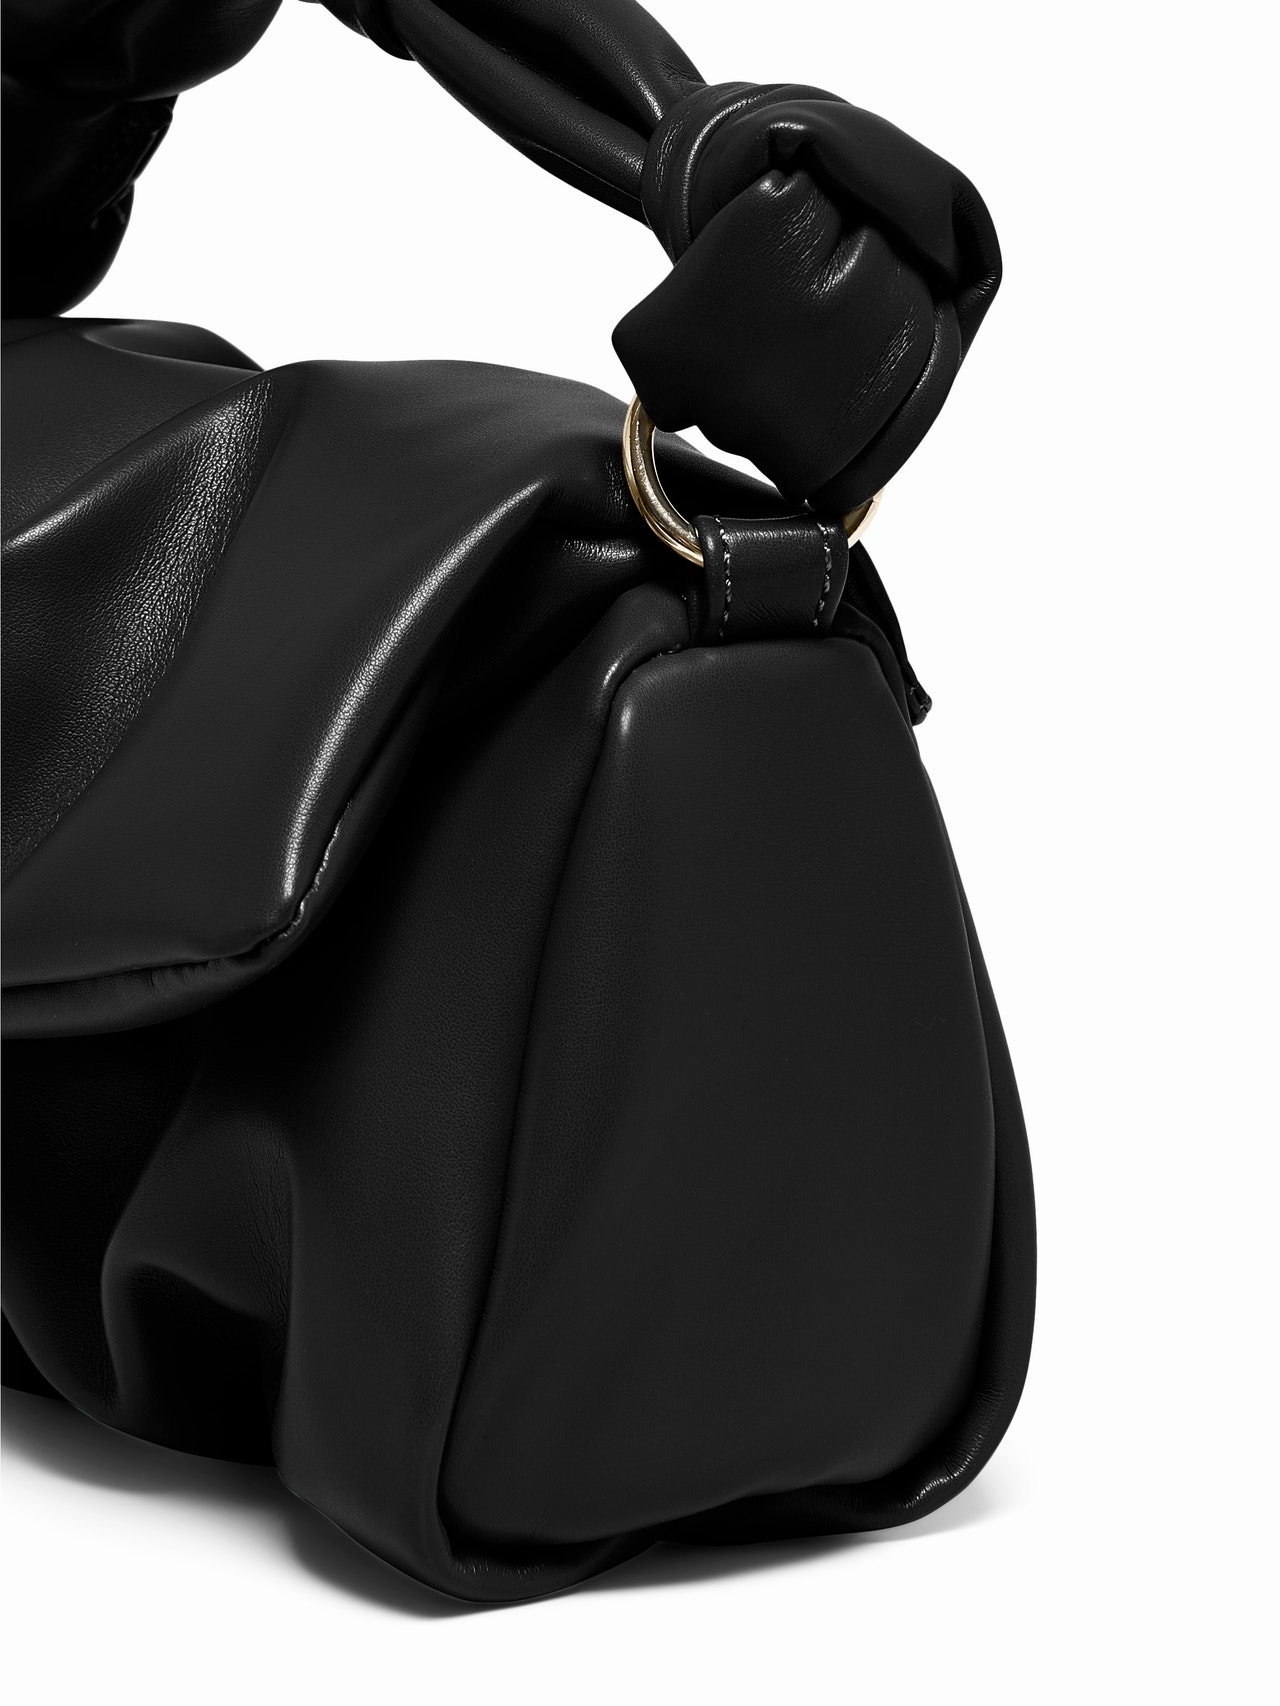 ONLY Faux leather Handbag -Black - 15273728